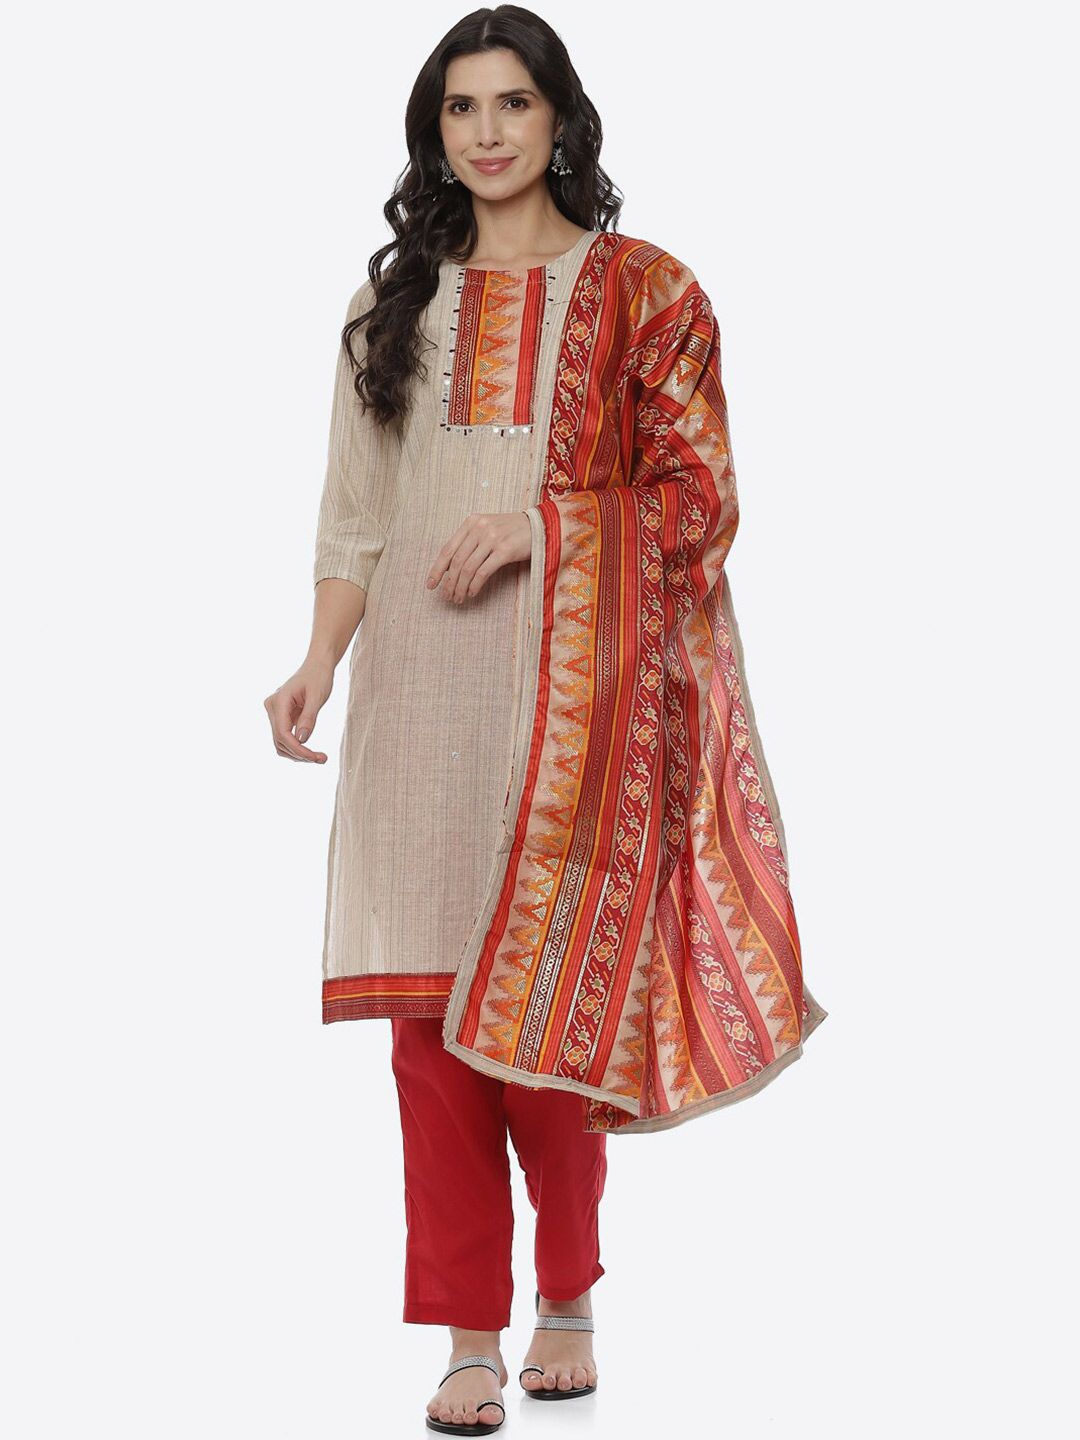 Biba Beige & Maroon Unstitched Dress Material Price in India